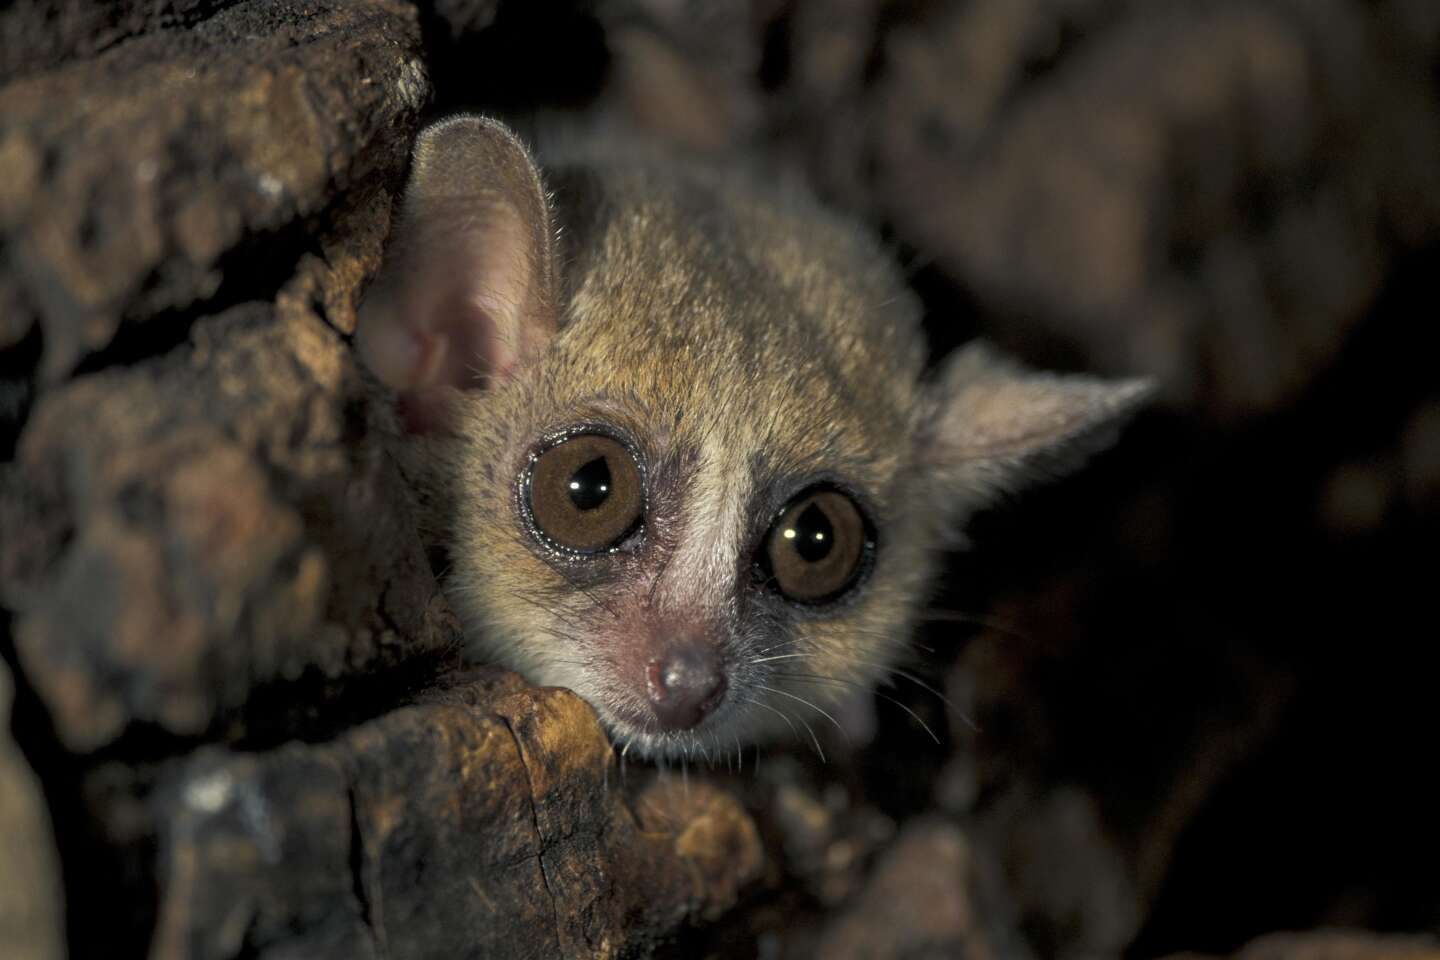 A small lemur offers itself as a model of torpor